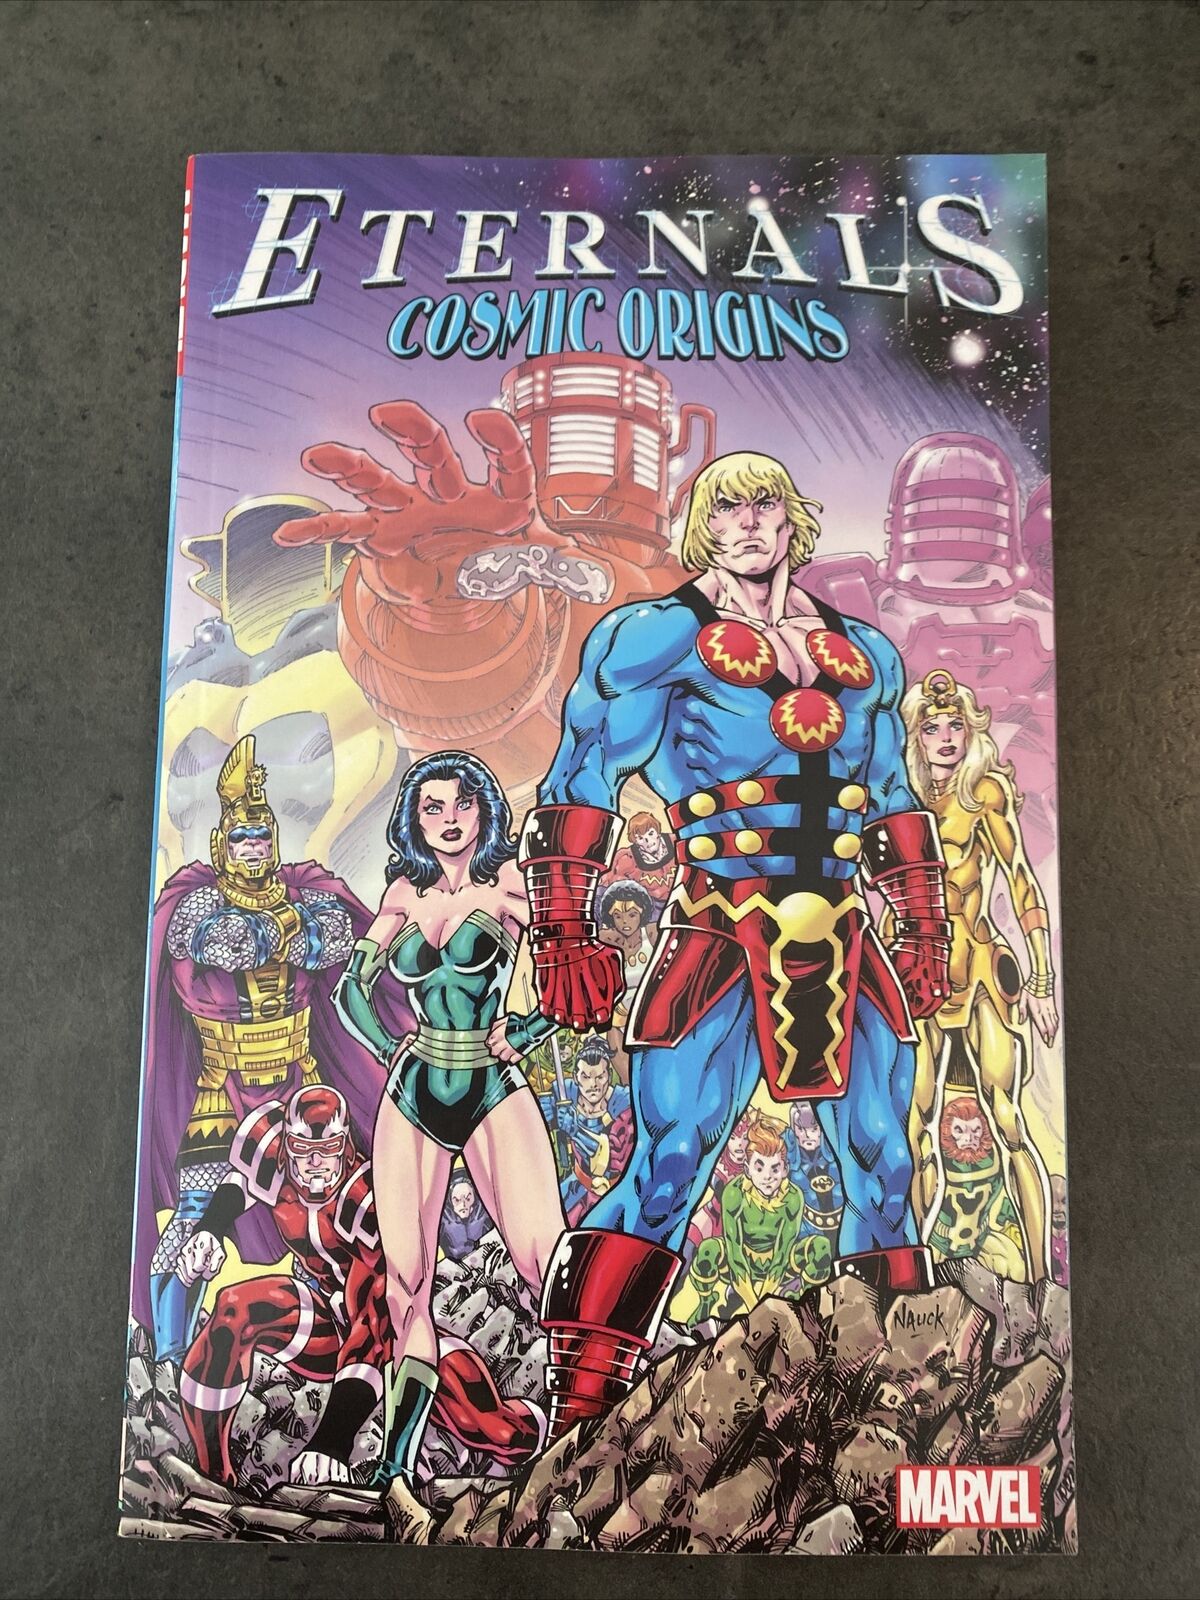 Eternals: Cosmic Origins by Mark Gruenwald, Jack Kirby, Danny Fingeroth and Bob